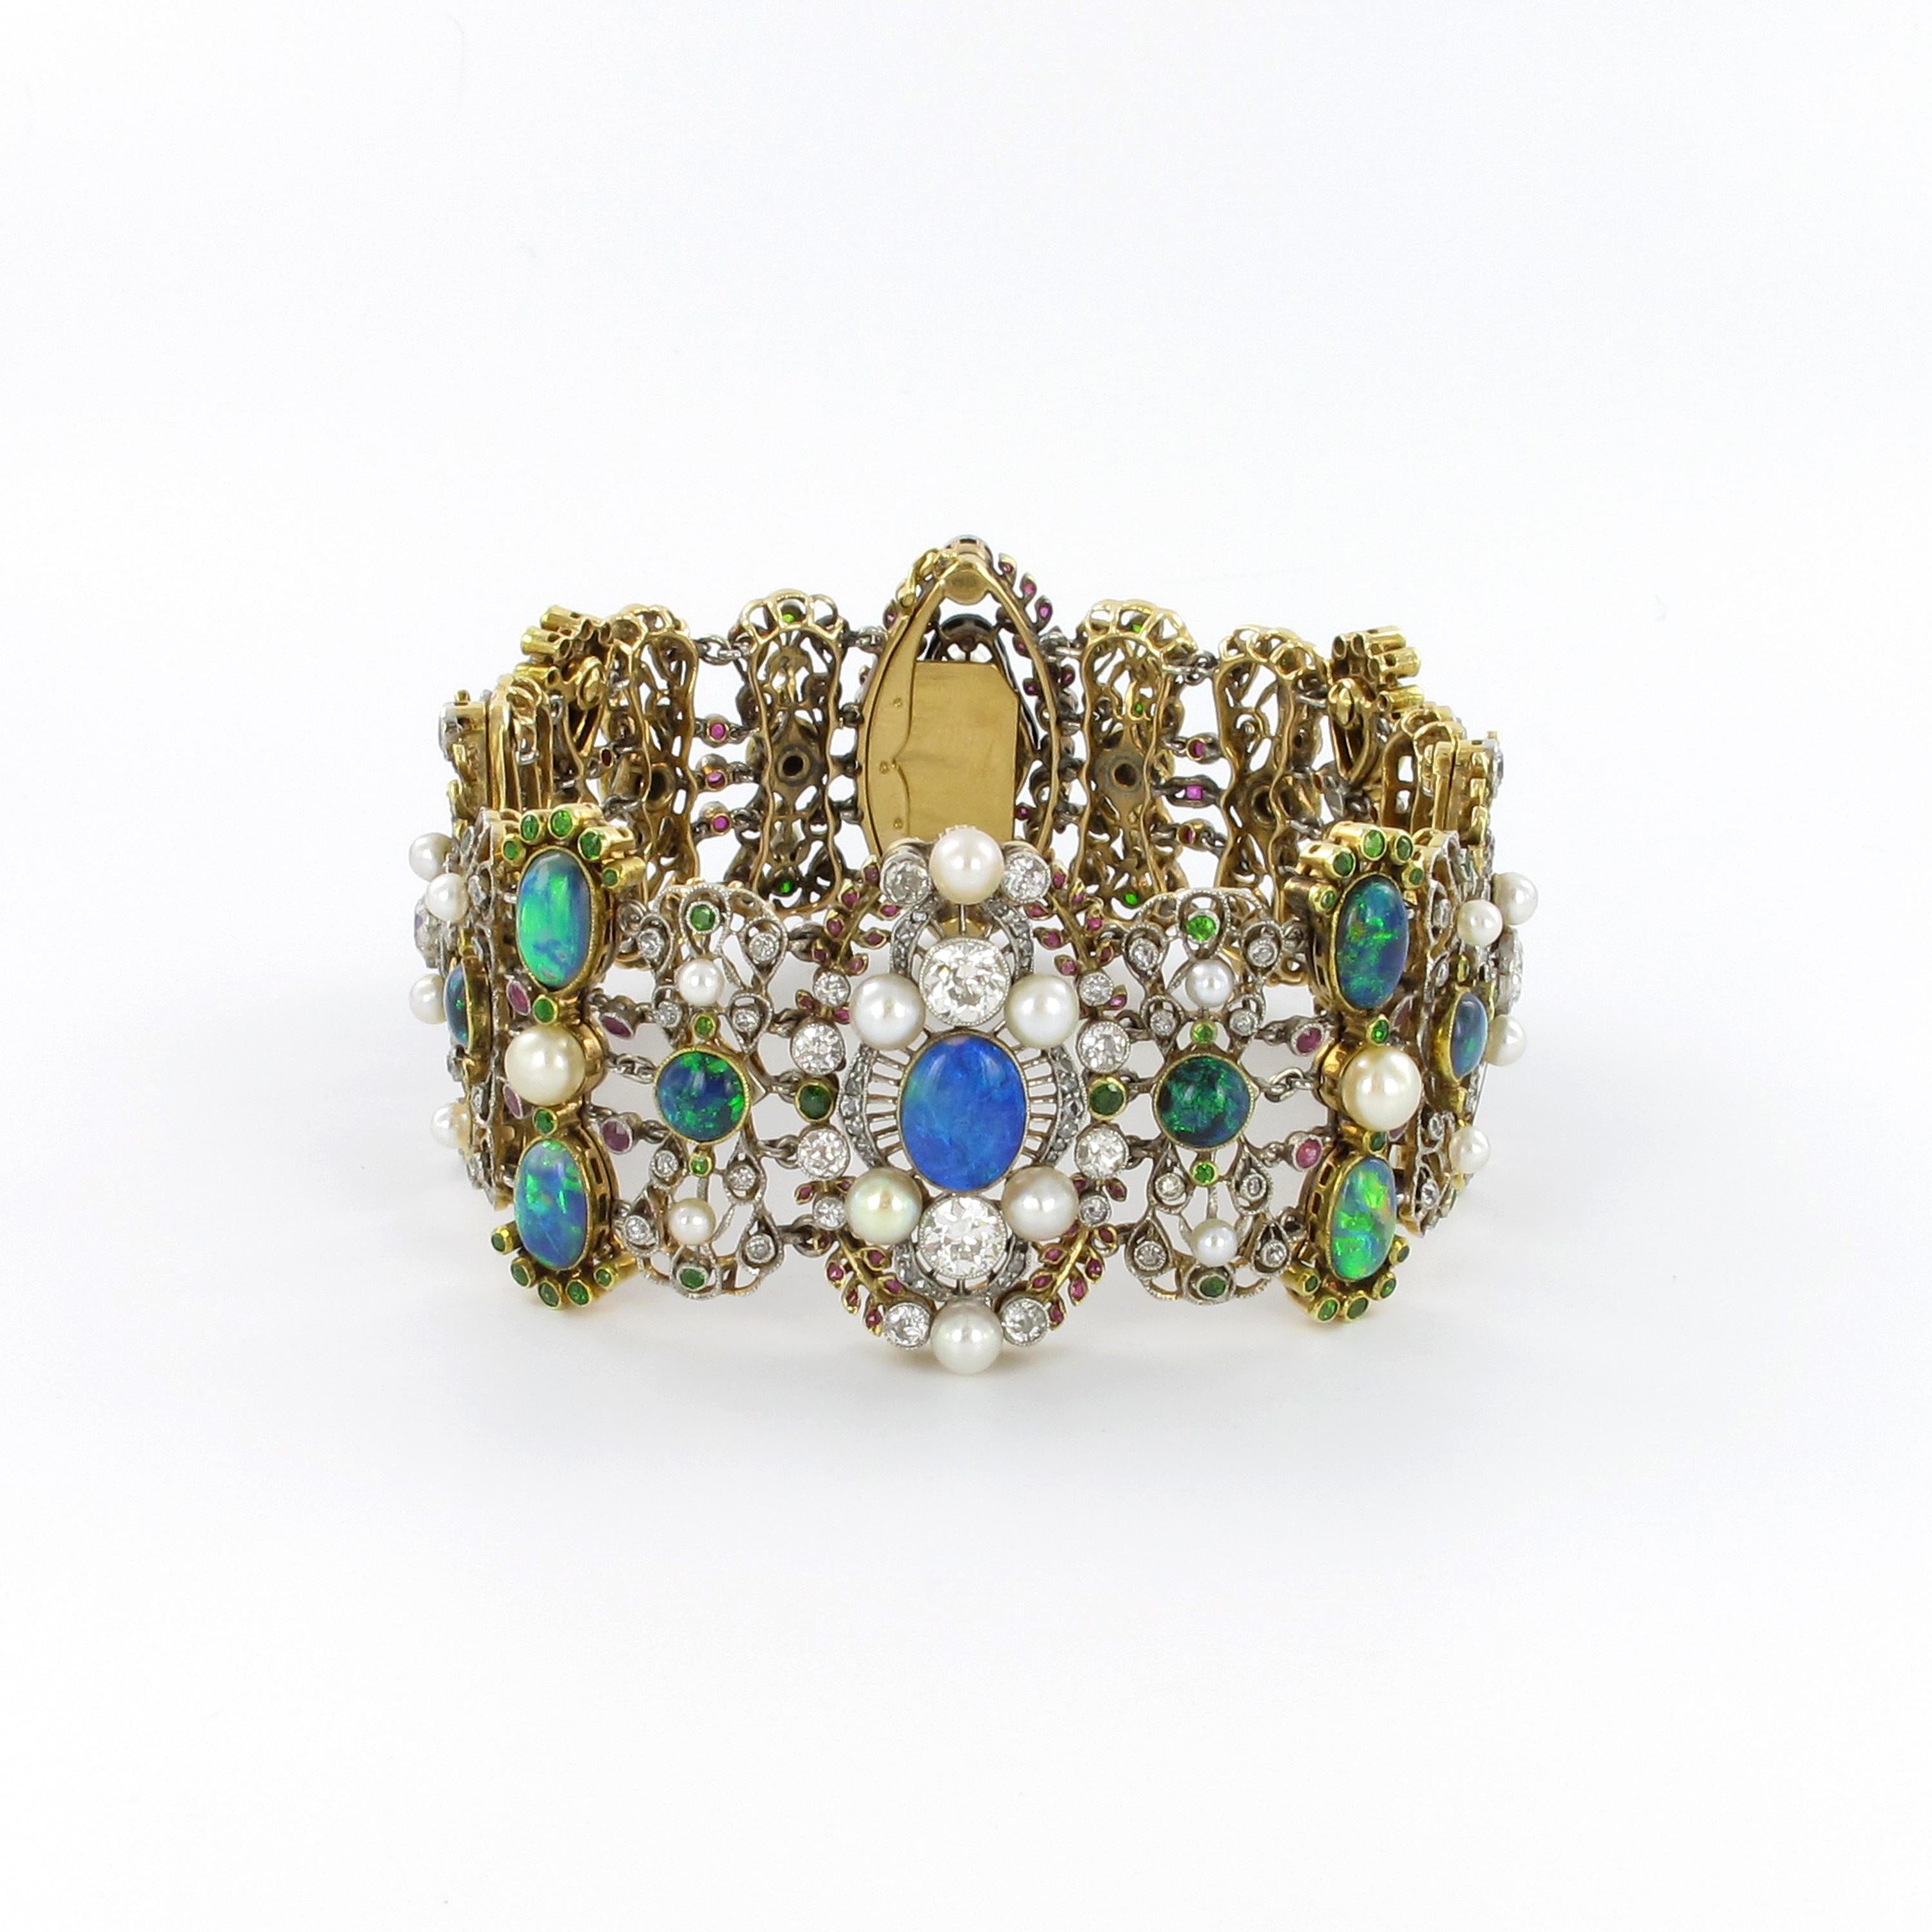 Belle Époque/Art Nouveau Bracelet with Opals, Pearls and Diamonds by Rothmuller For Sale 1